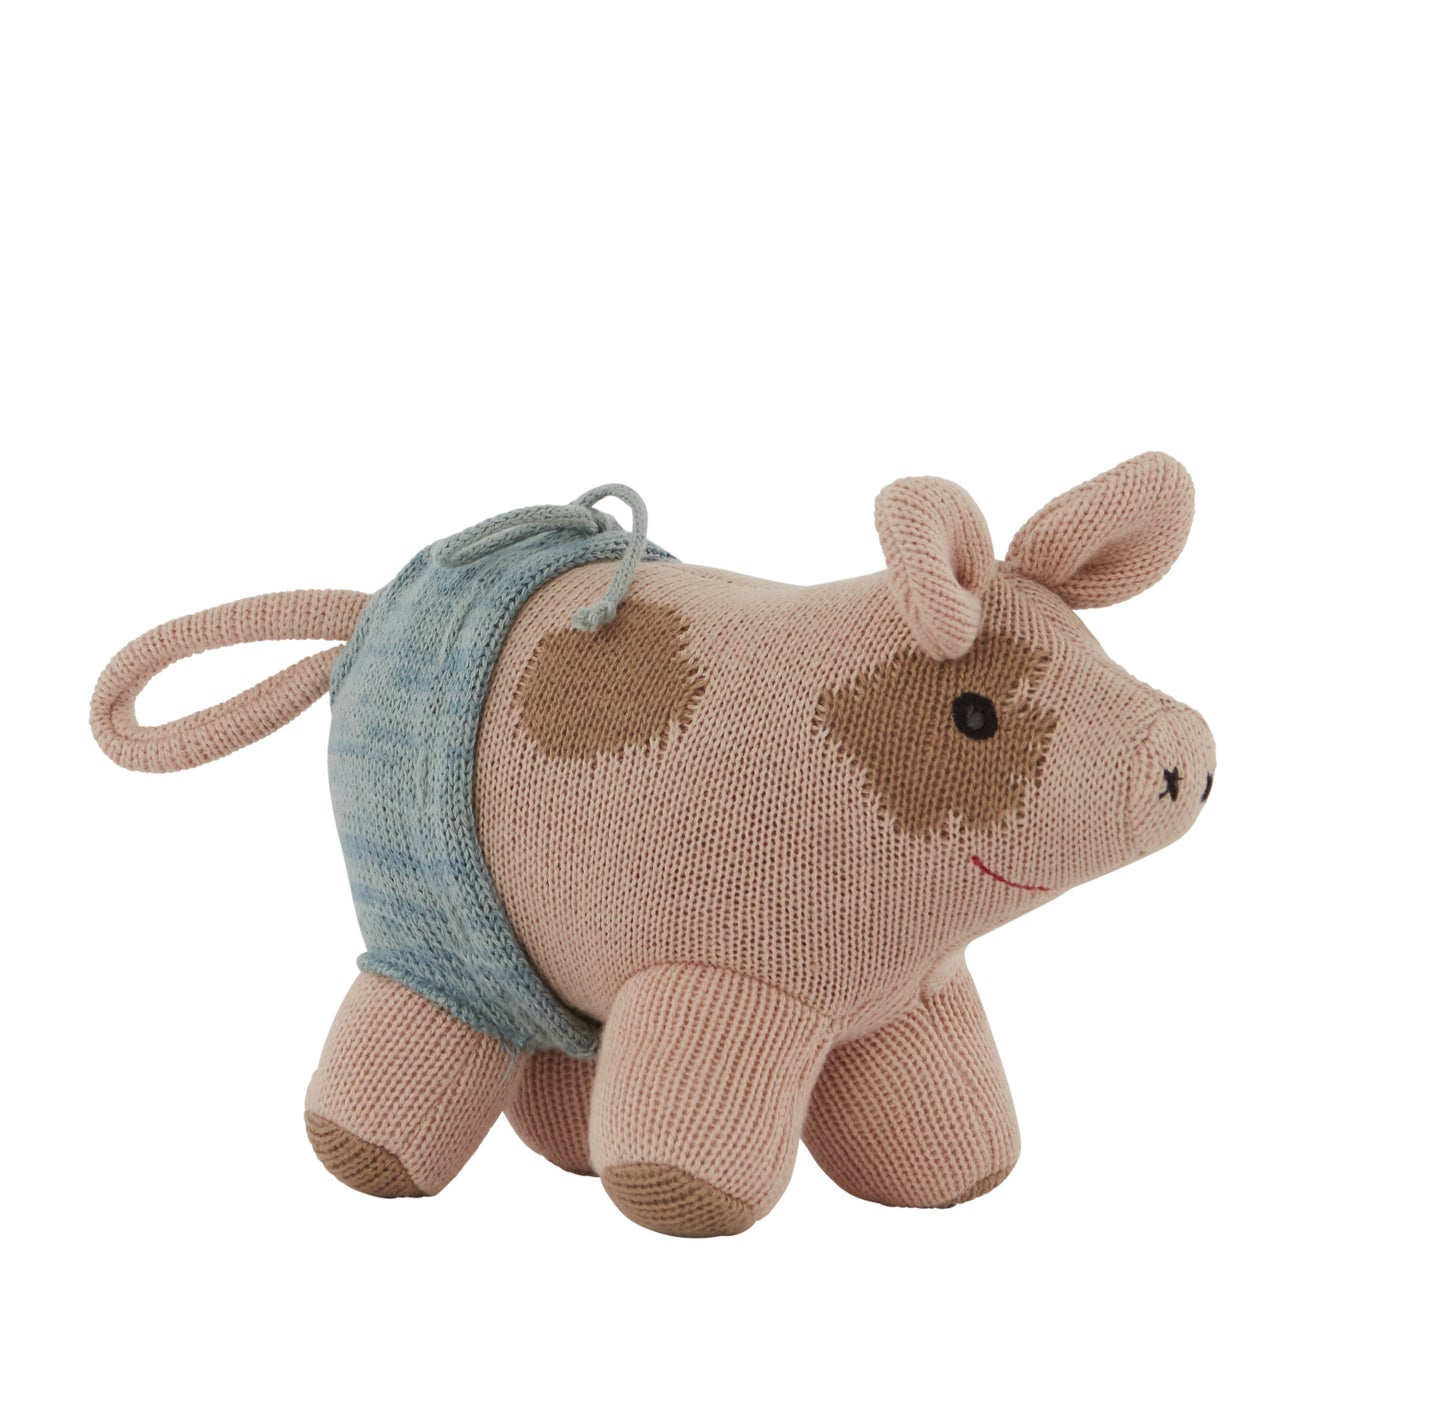 OYOY Pig Hugo Cotton Soft Toy Small